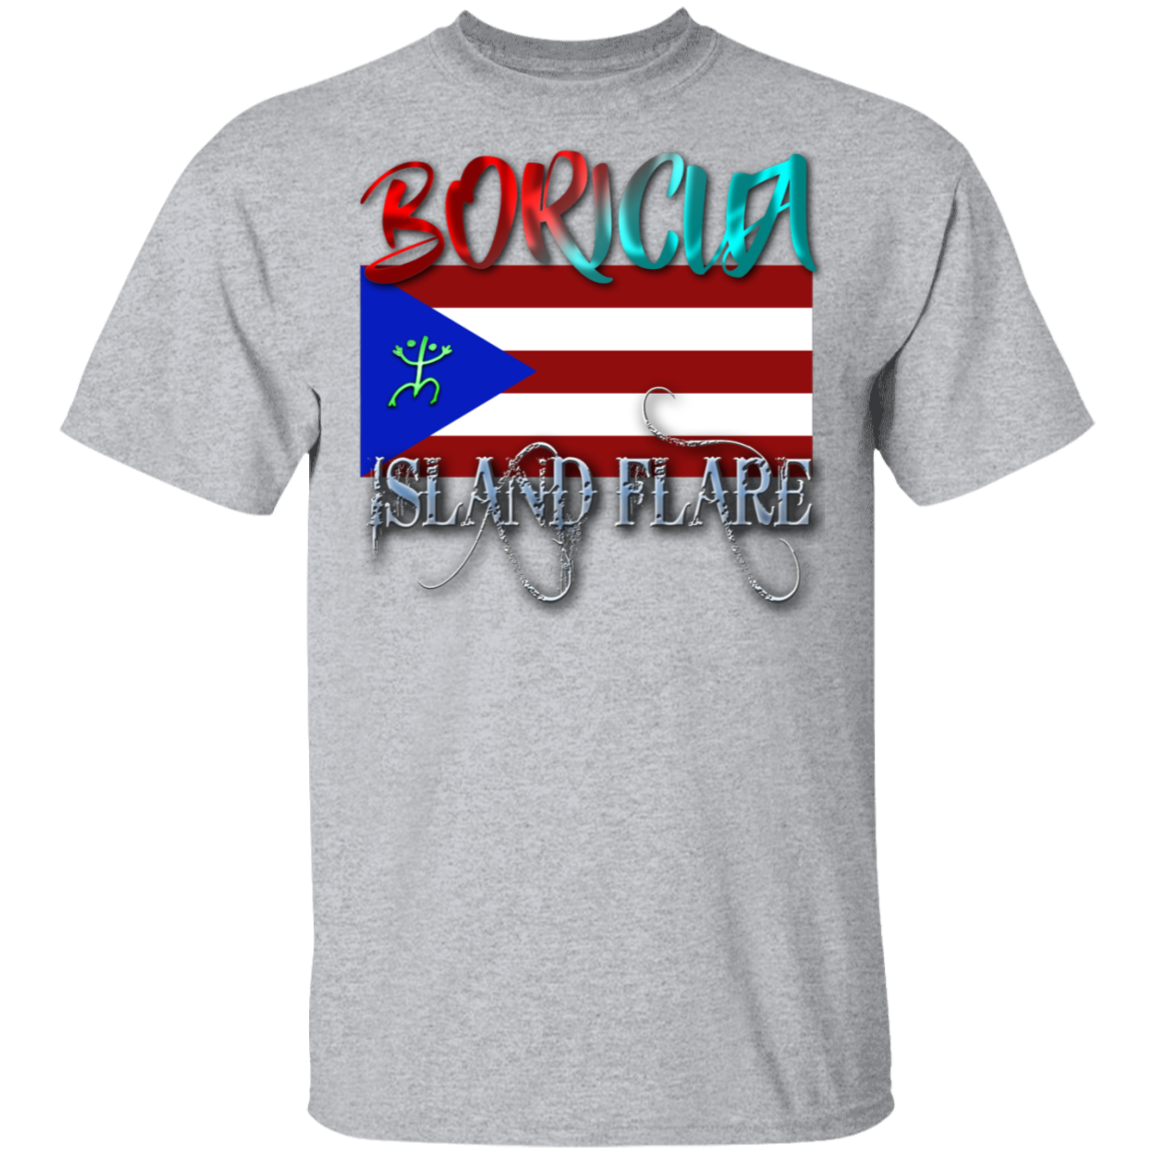 Boricua Island Flare 5.3 oz. T-Shirt